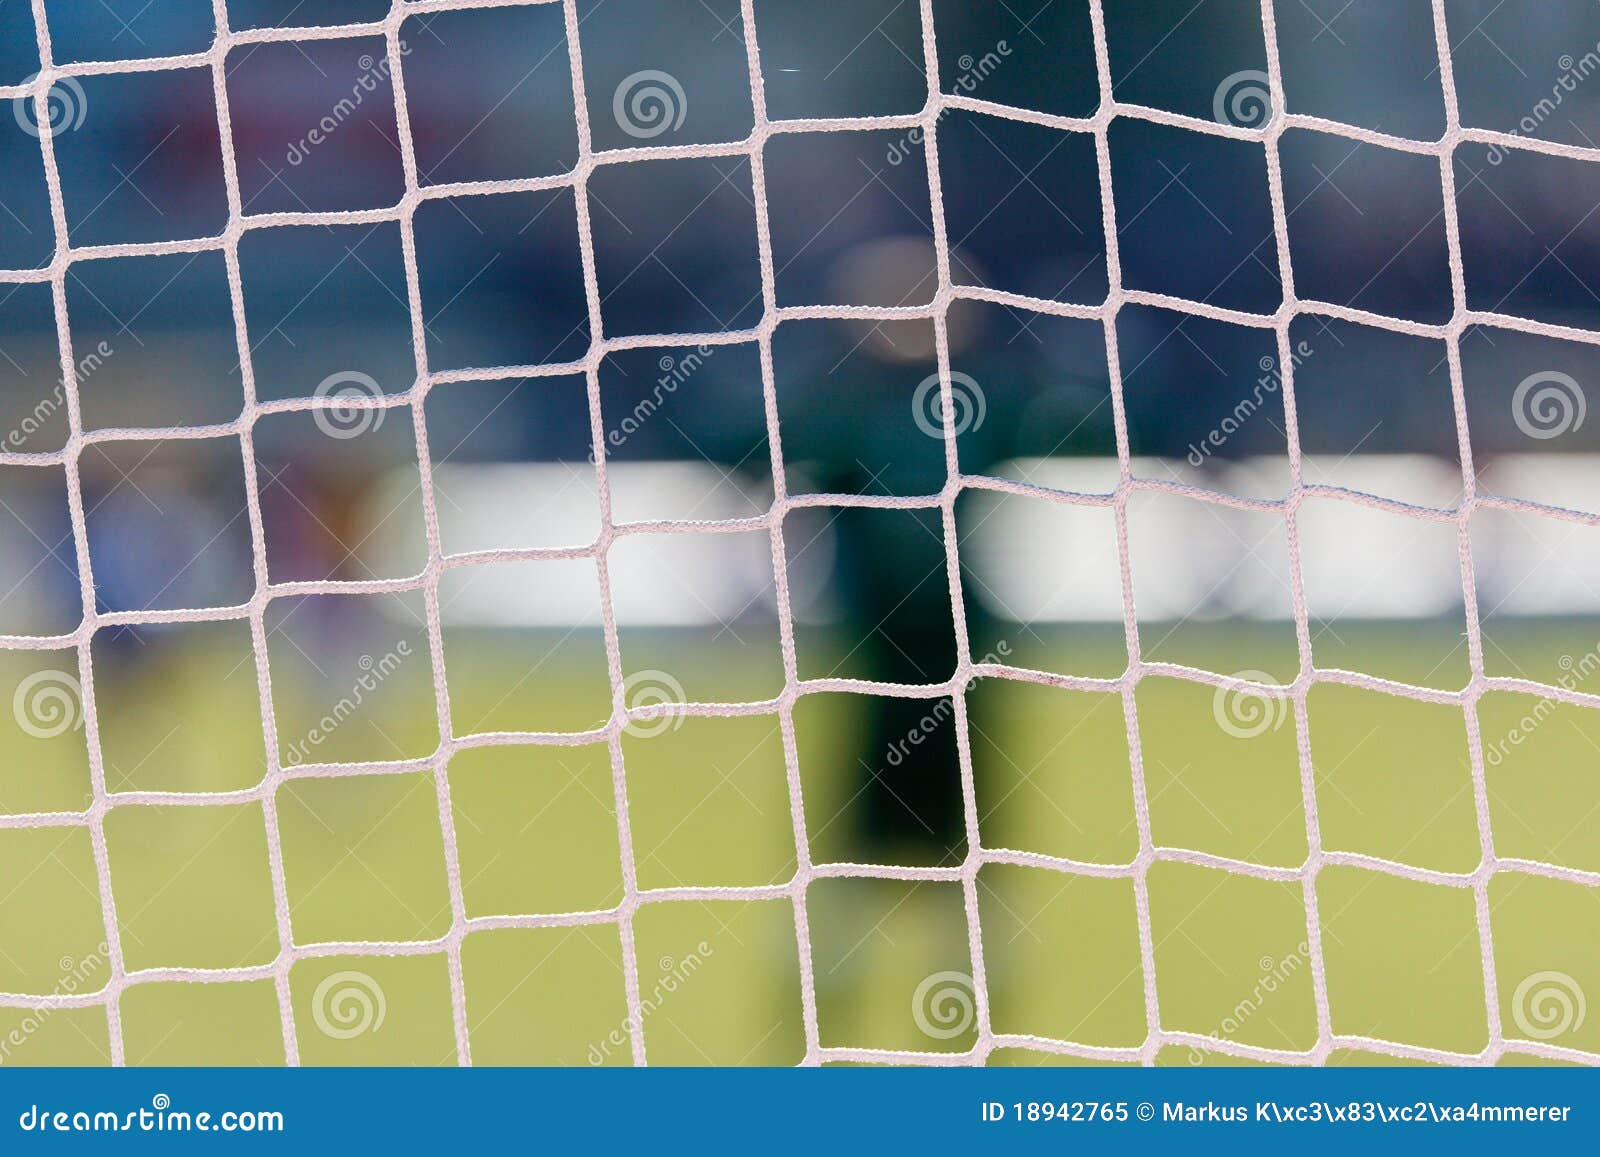 Football Goal Net Stock Photos - 61,946 Images